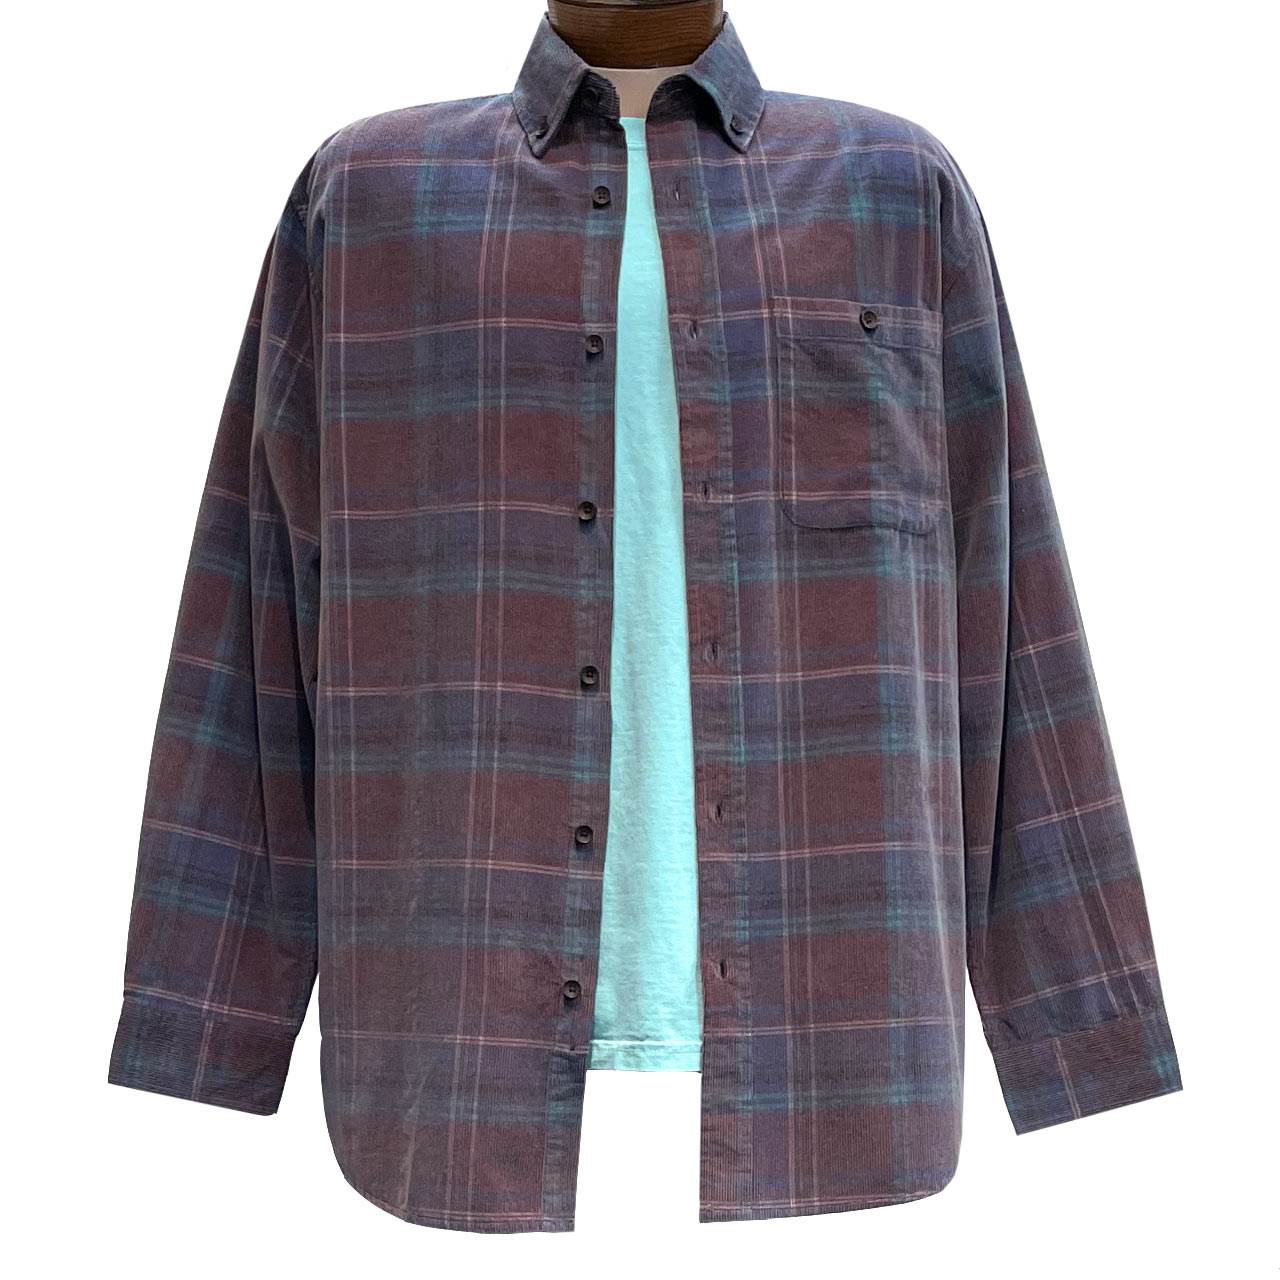 Men's R. Options Corduroy Long Sleeve Yarn Dyed Plaid Sport Shirt, #82241-9B Wine/Aqua